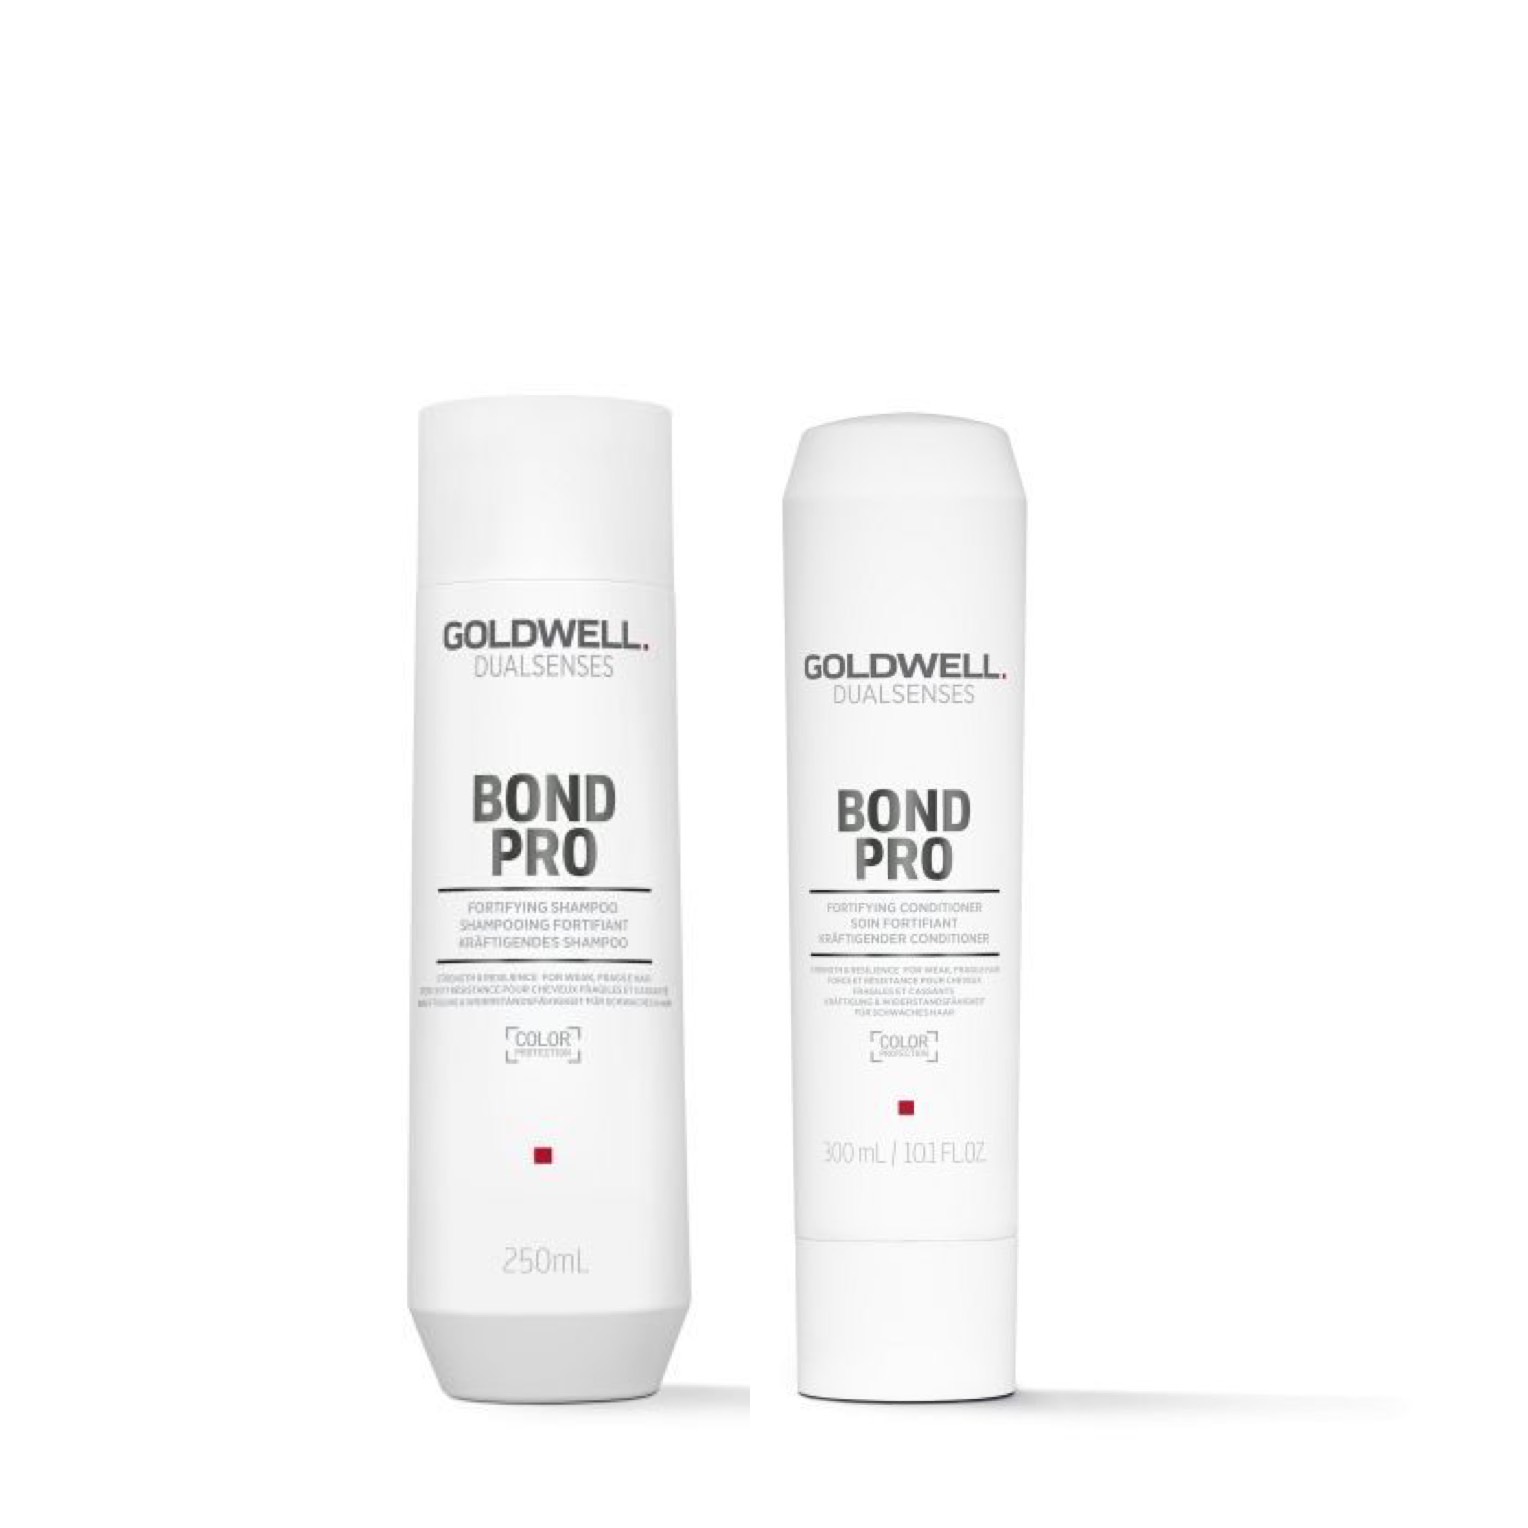 Goldwell Dualsenses Bond Pro Duo - Shampoo 250ml + Conditioner 200ml